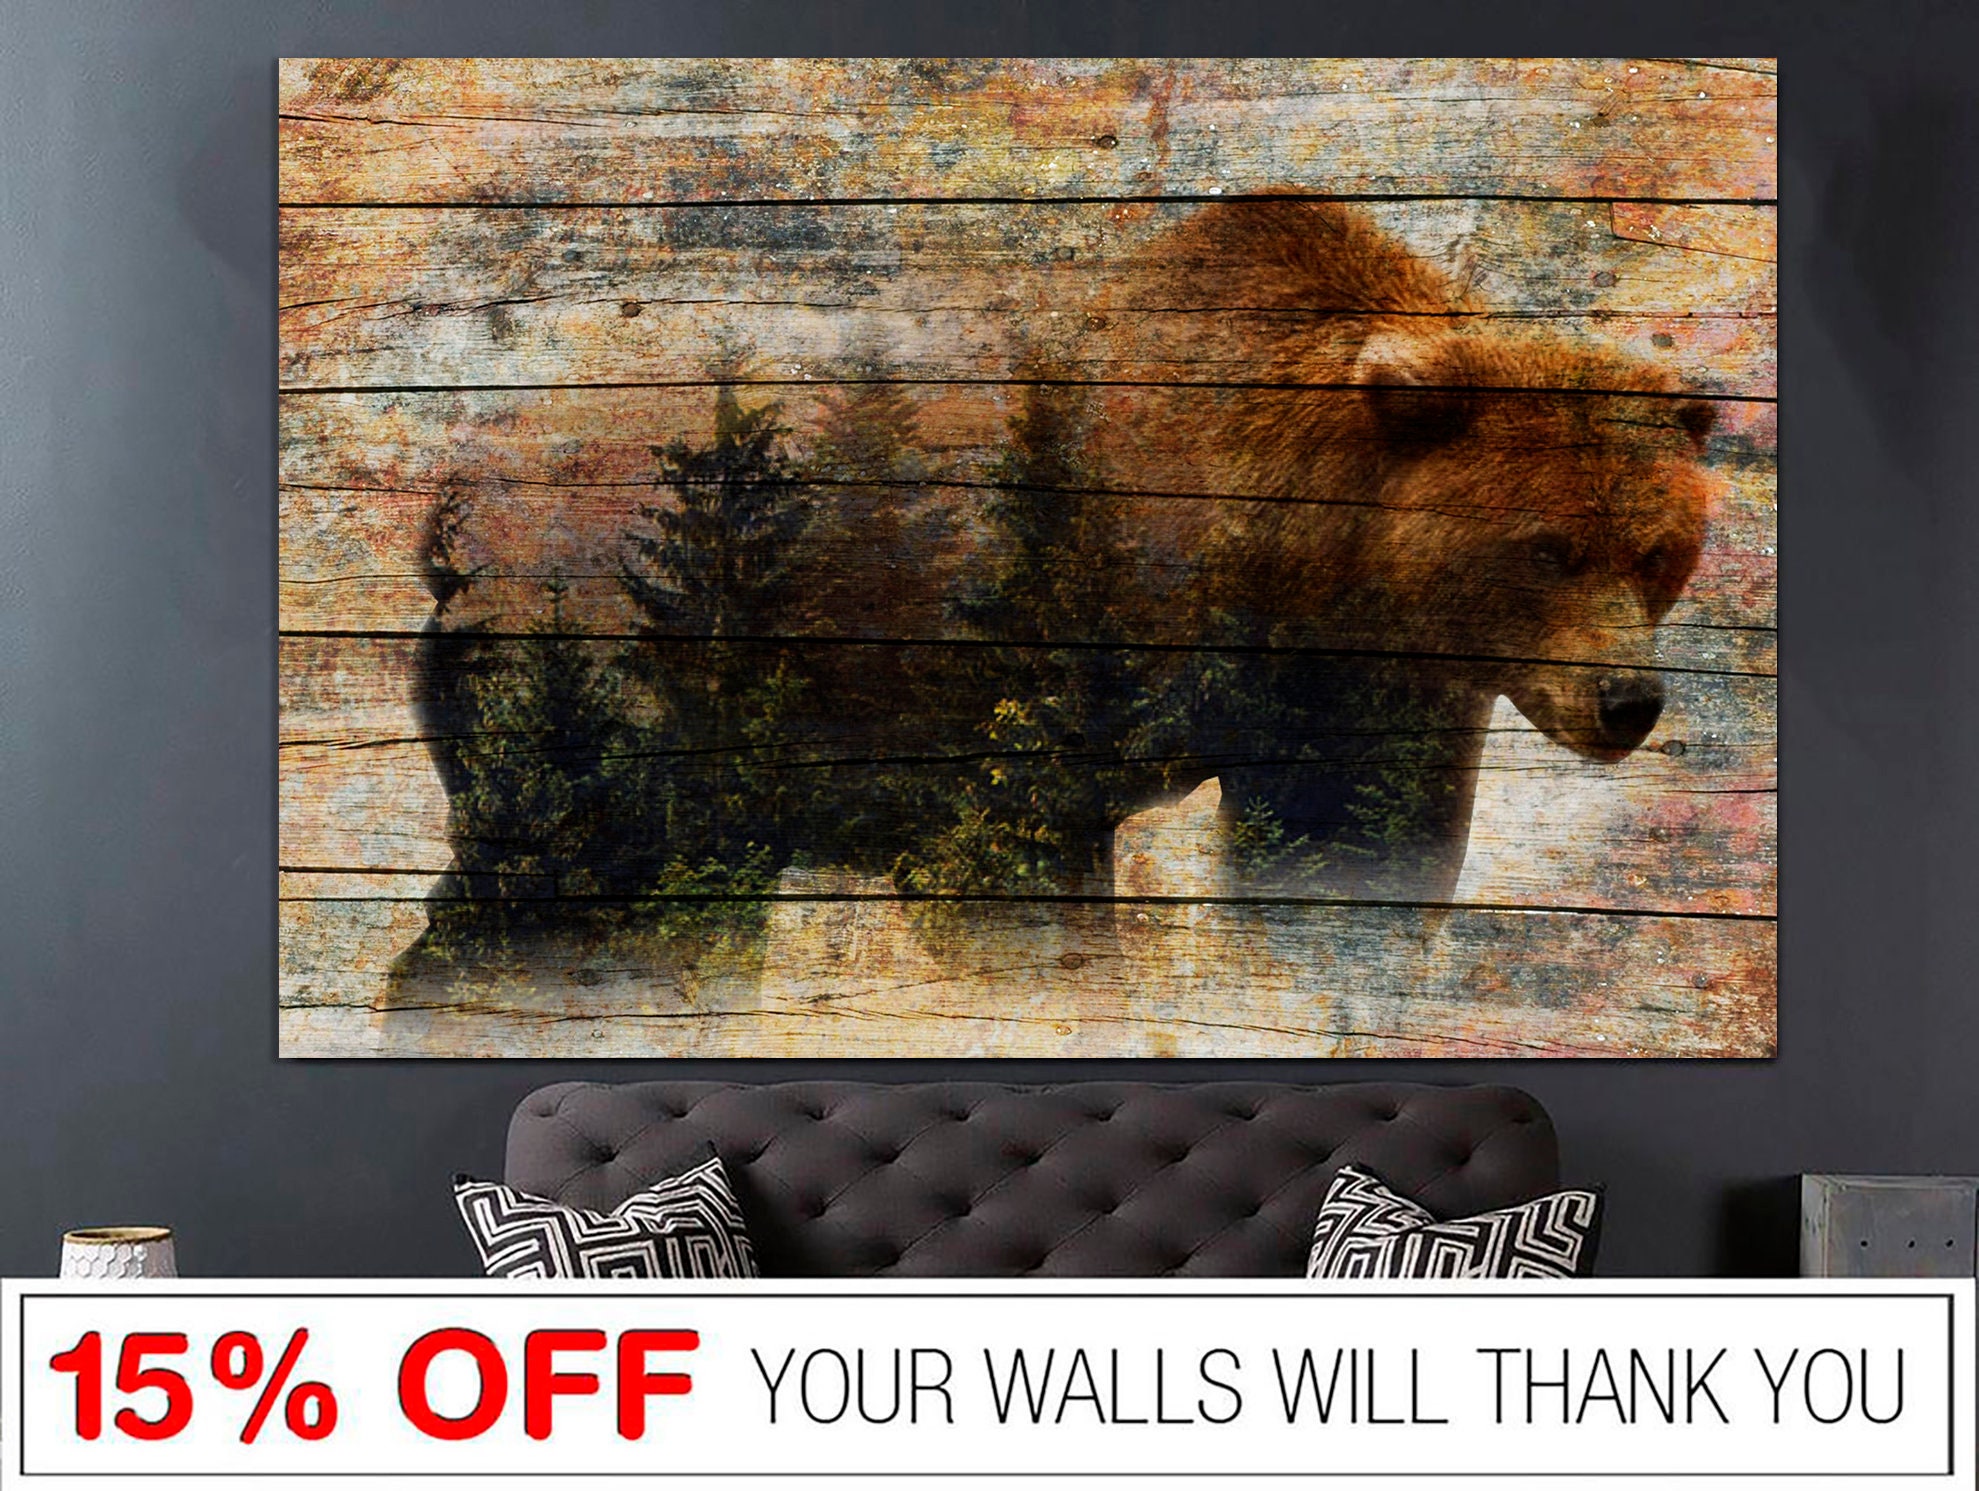 Bear Cub Definition Wooden Sign  Wall Art Print on Real Wood – Mill Wood  Art